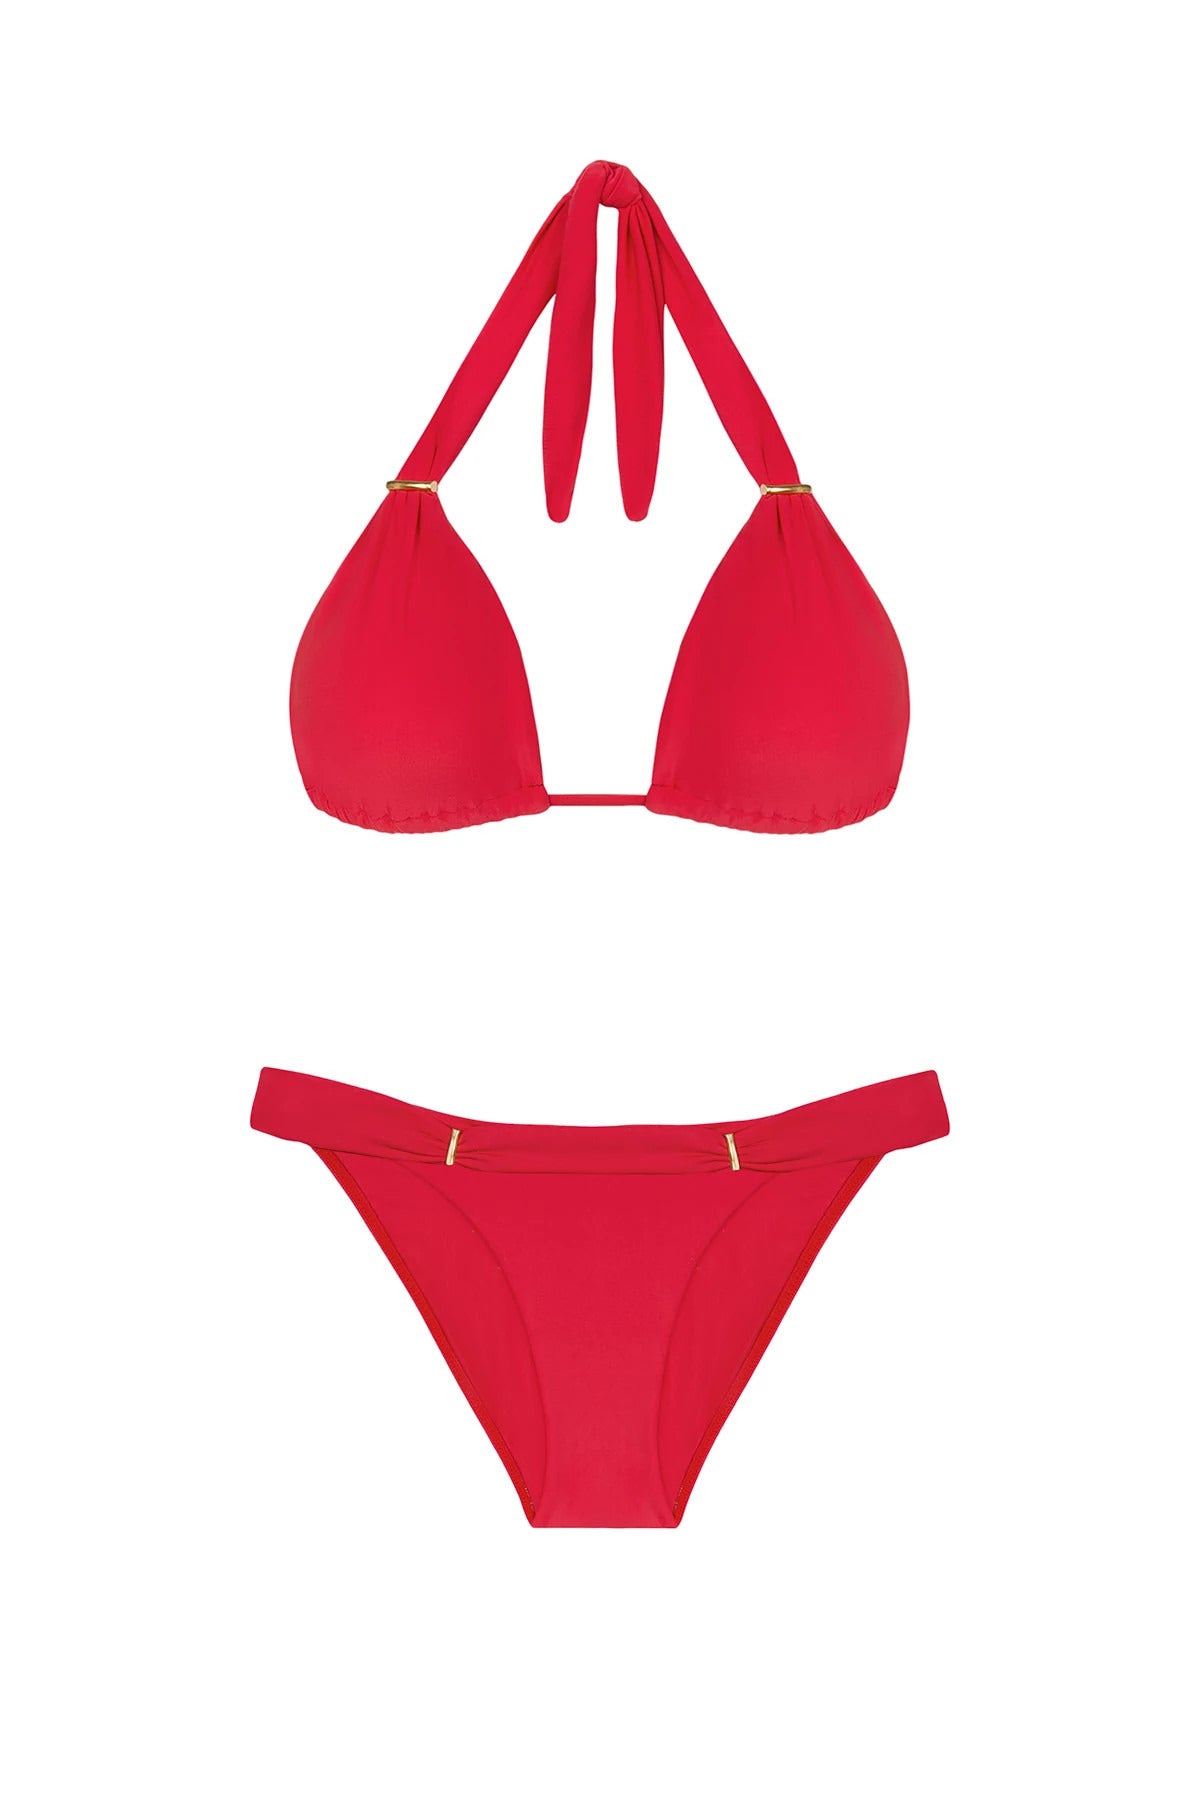 Vix Swimwear Women's Bia Sliding Halter Bikini Top - RED POPPY